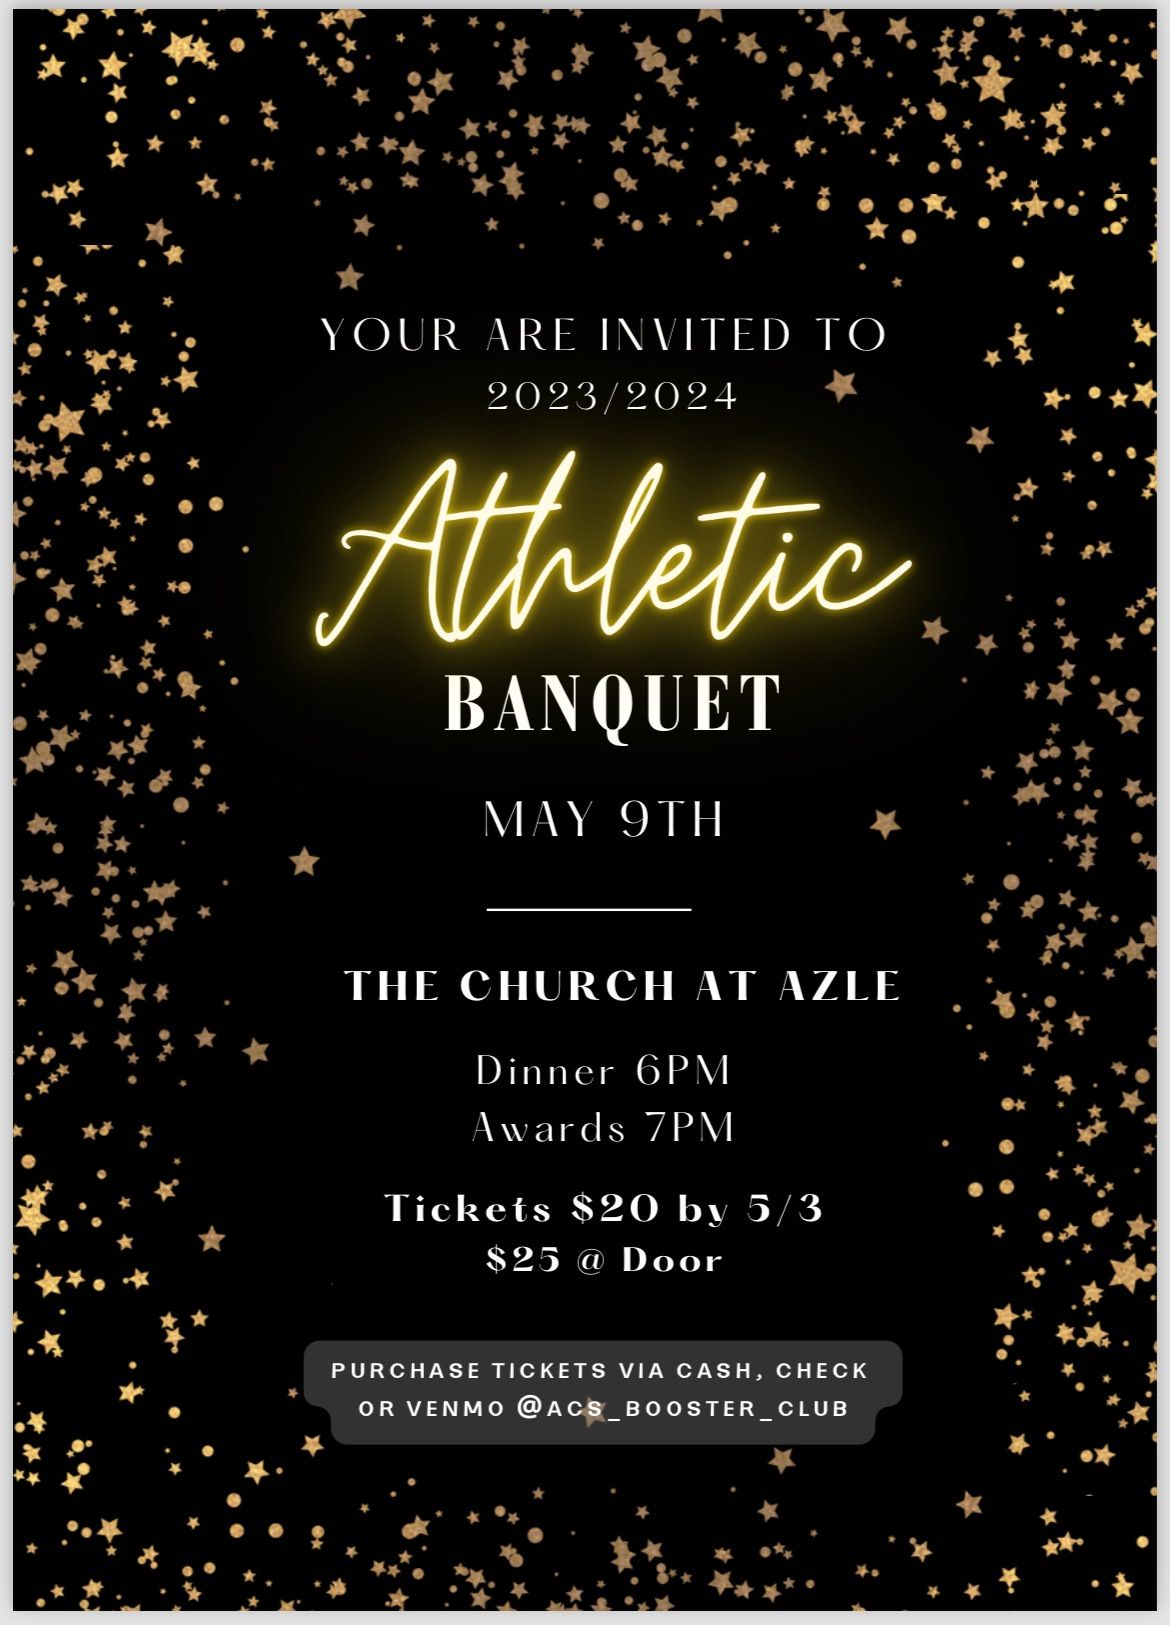 ACS Athletic Banquet